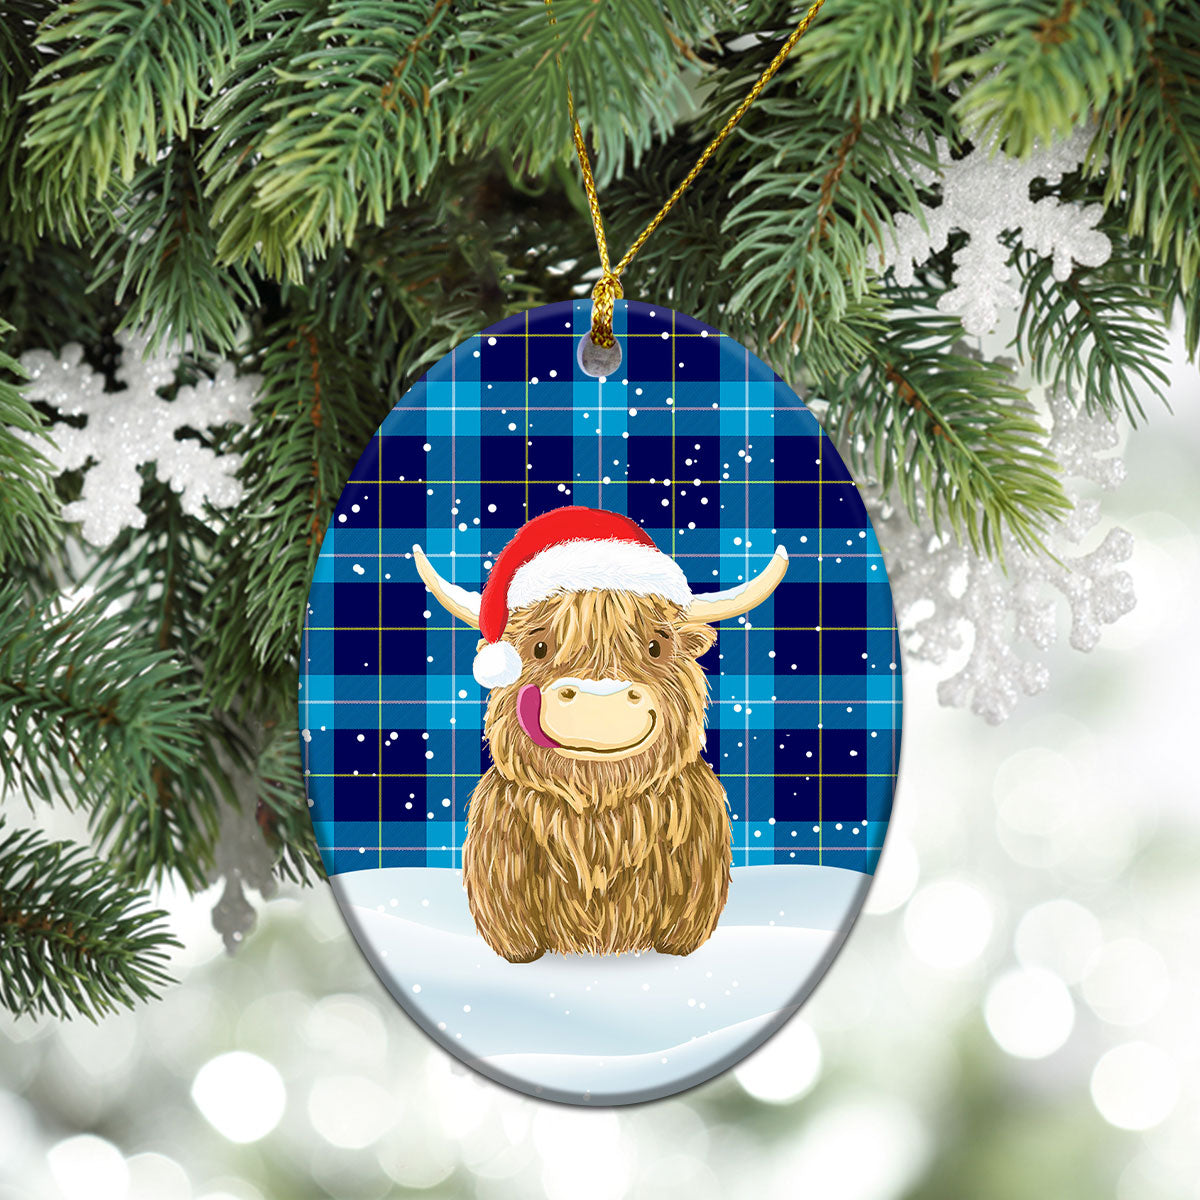 McKerrell Tartan Christmas Ceramic Ornament - Highland Cows Style